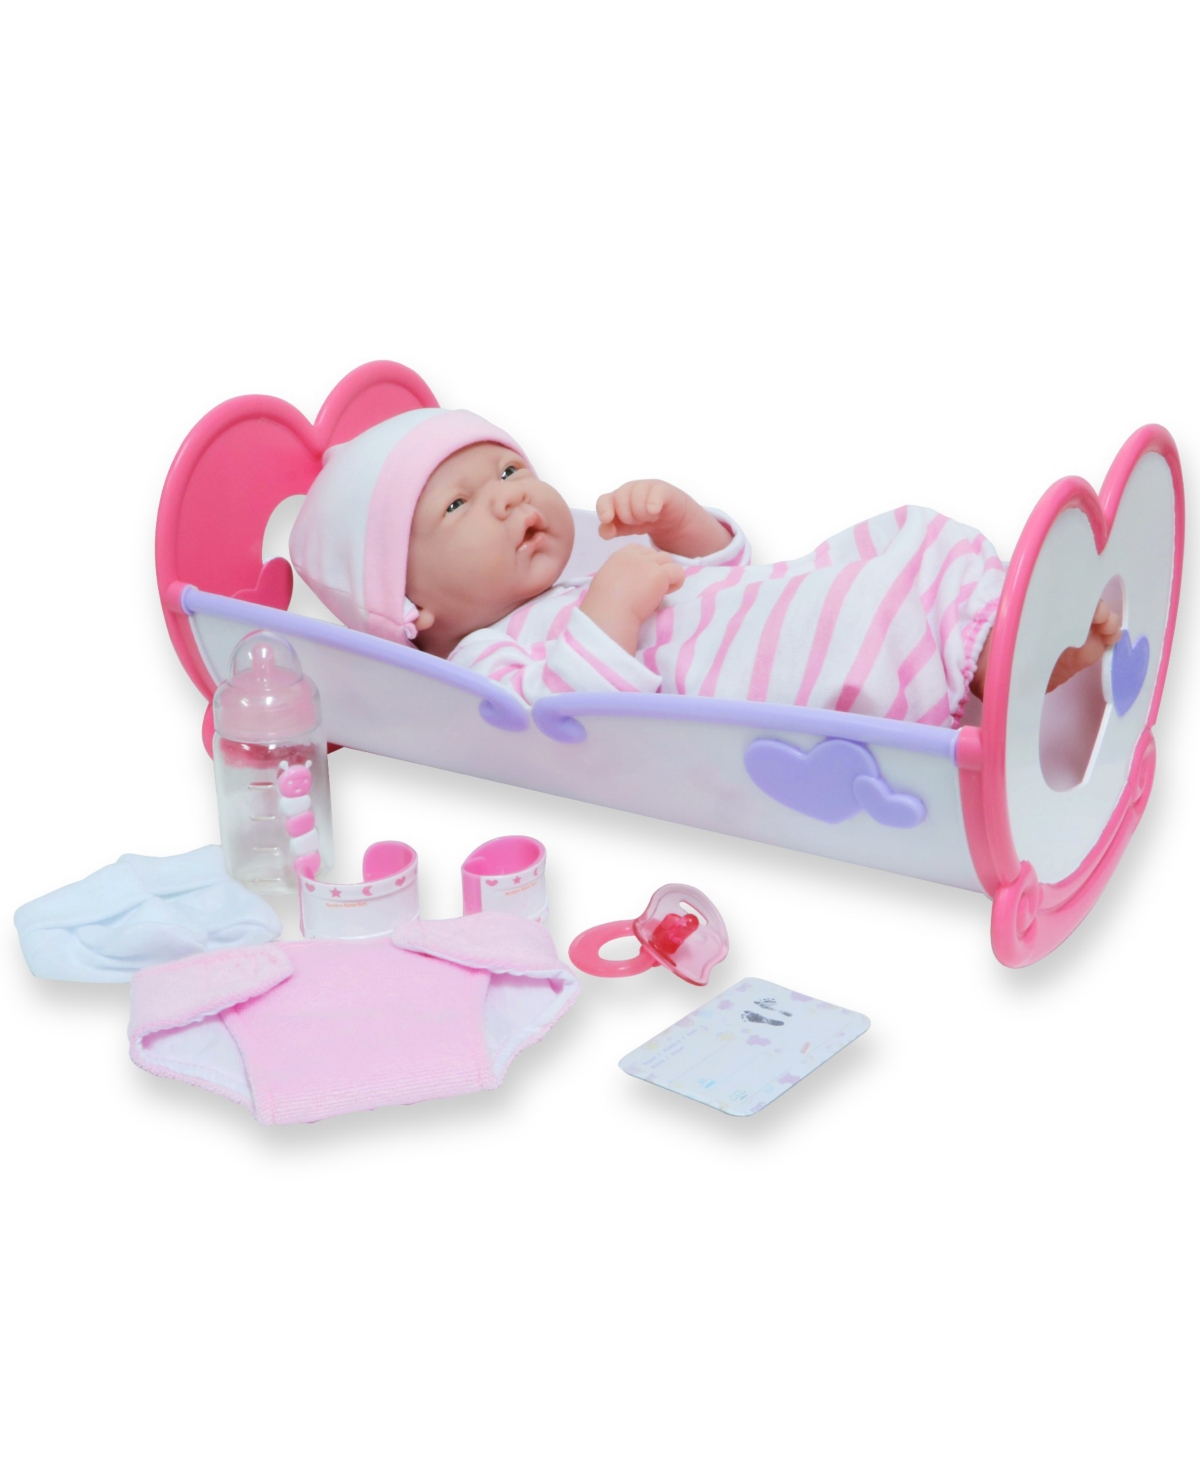 Jc Toys La Newborn 14" Baby Doll Rocking Crib Gift Set, 11 Pieces In Pink